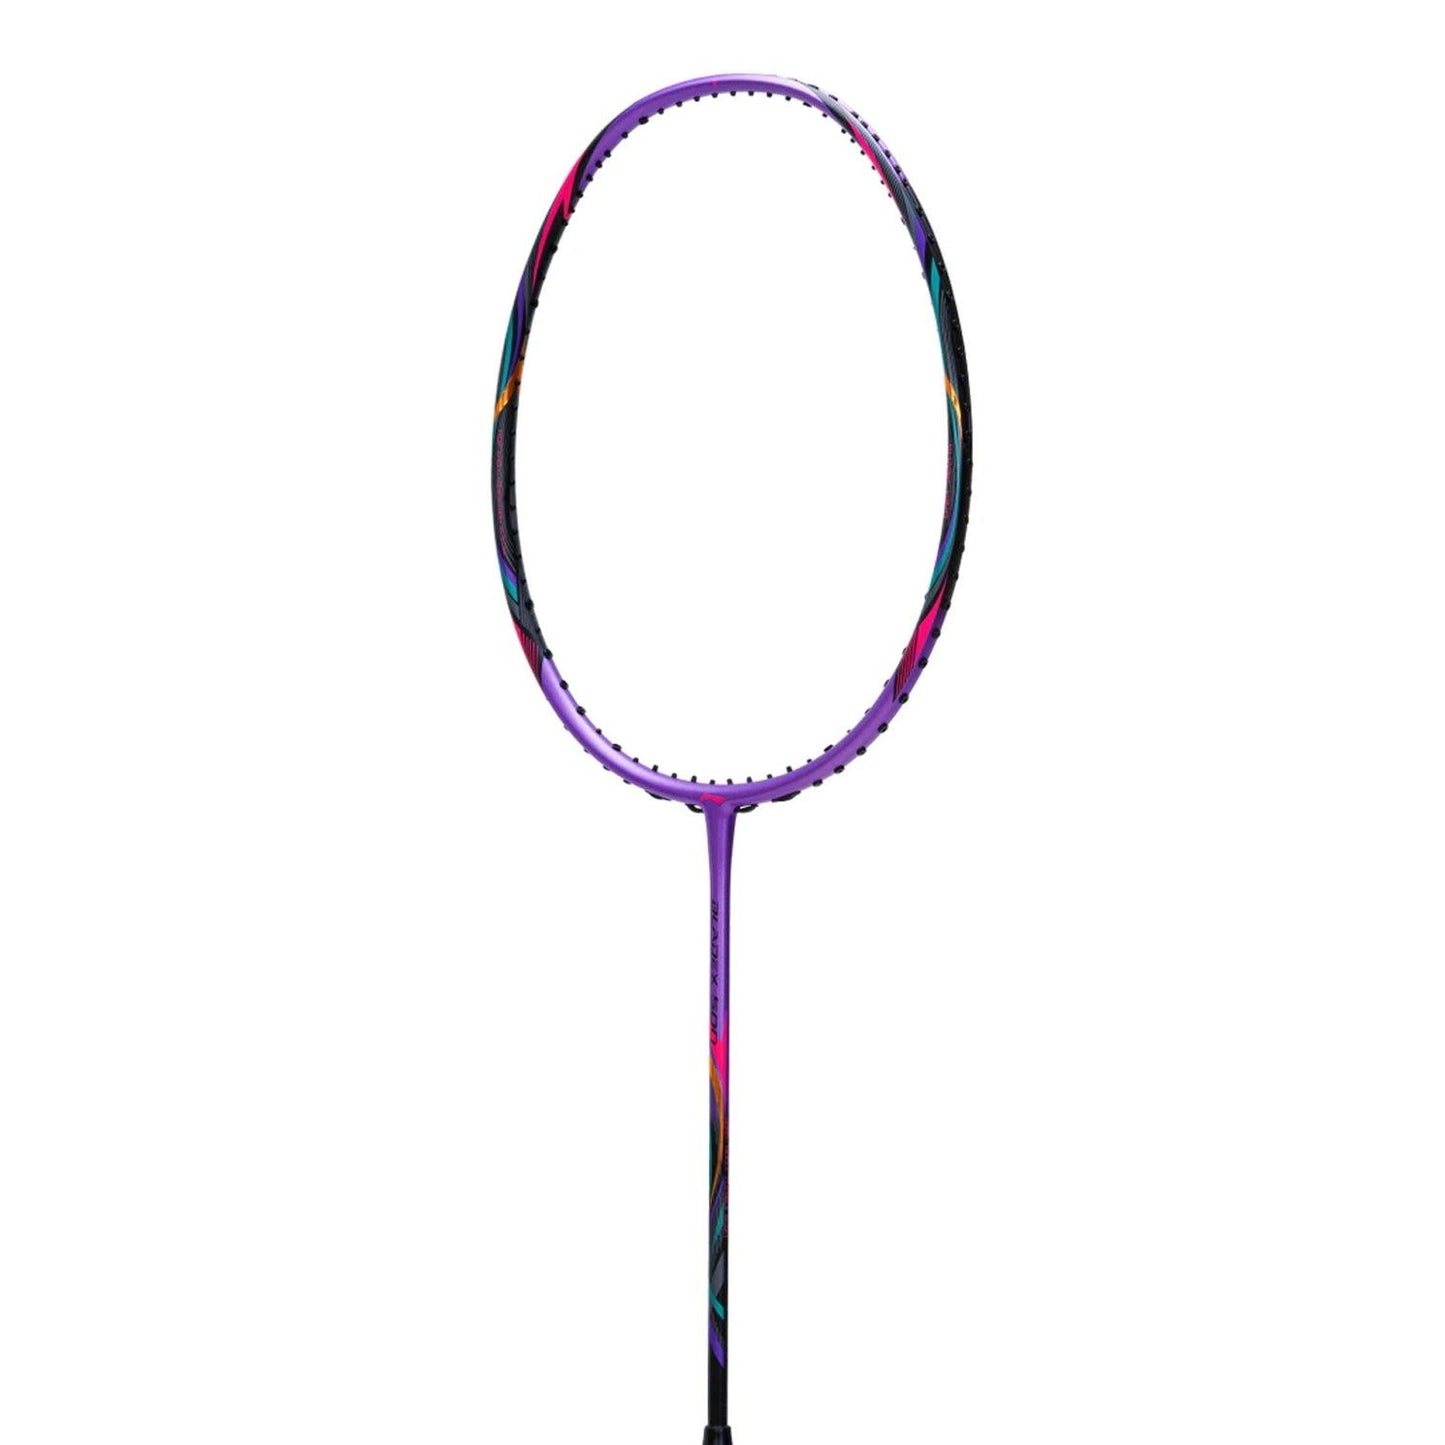 Li-Ning BladeX 500 4U Badminton Racket